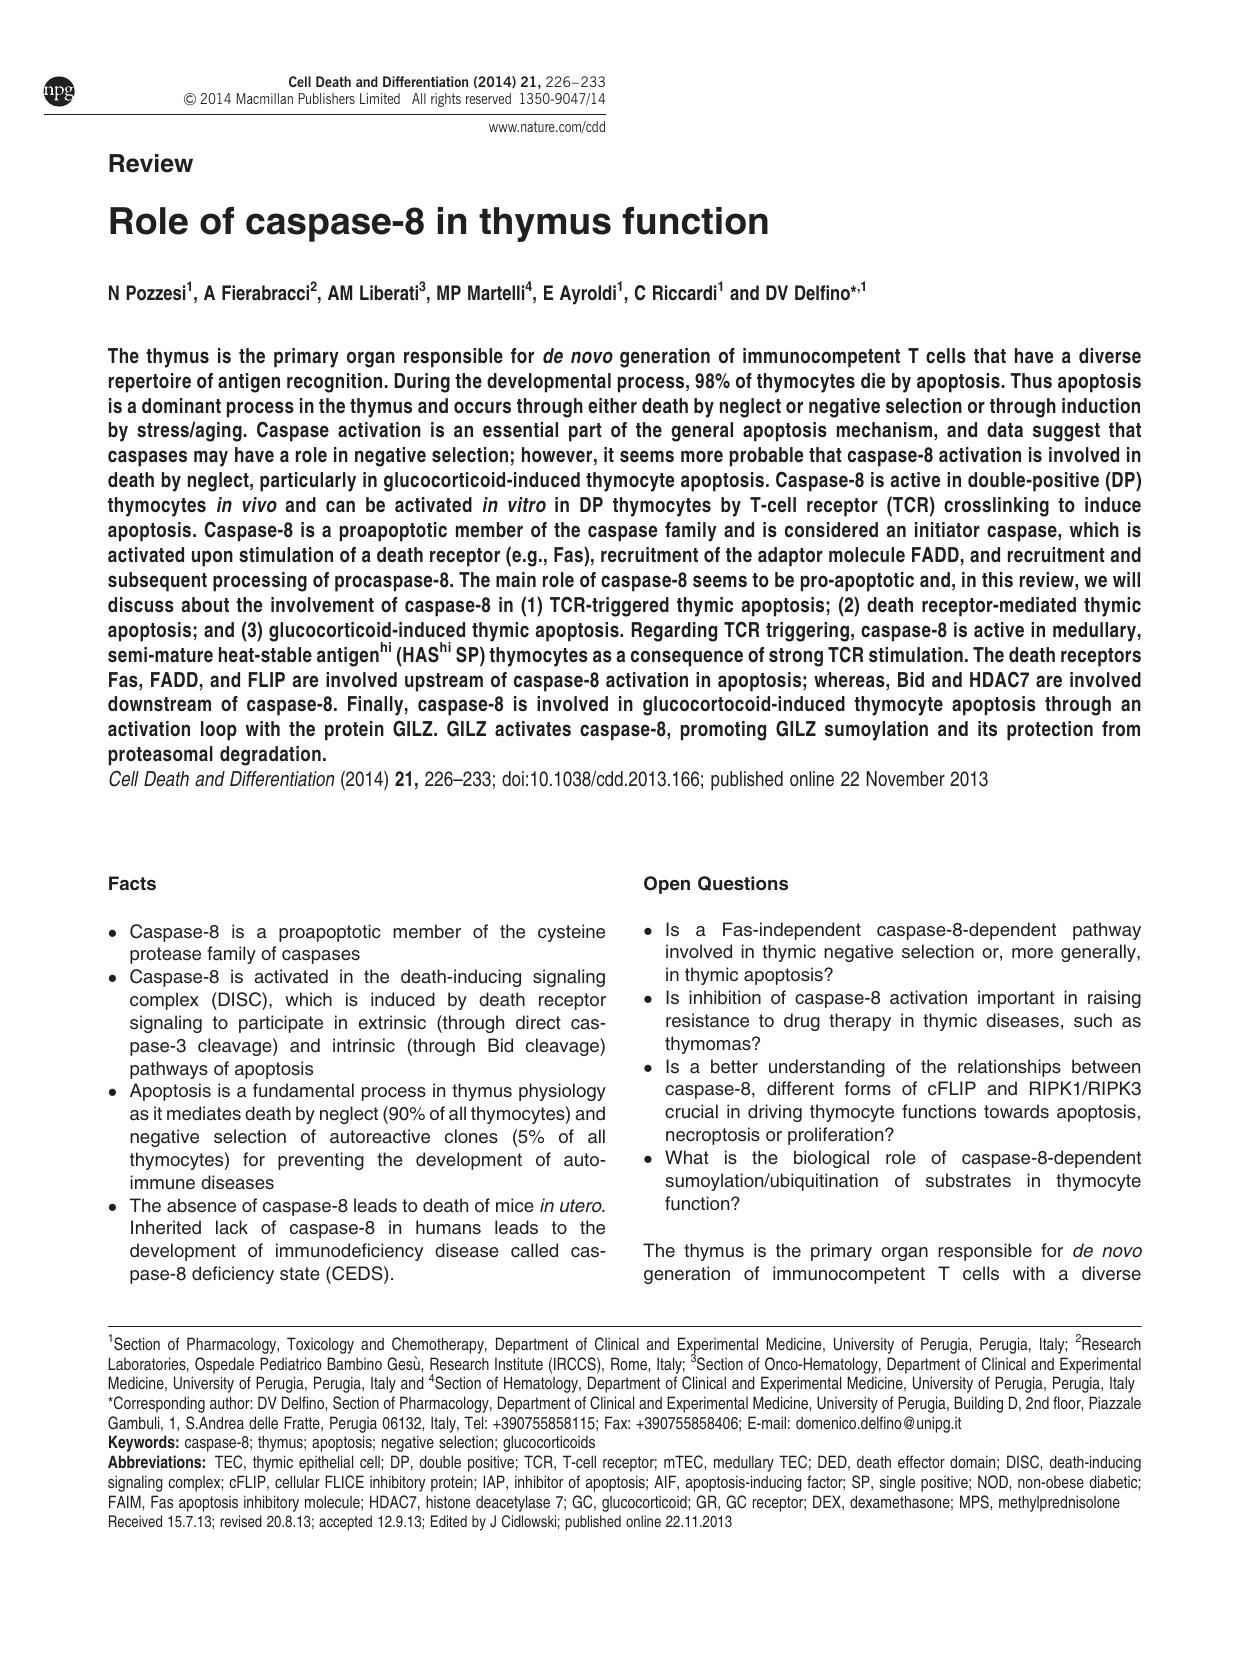 Role of caspase-8 in thymus function by N Pozzesi & A Fierabracci & A M Liberati & M P Martelli & E Ayroldi & C Riccardi & D V Delfino